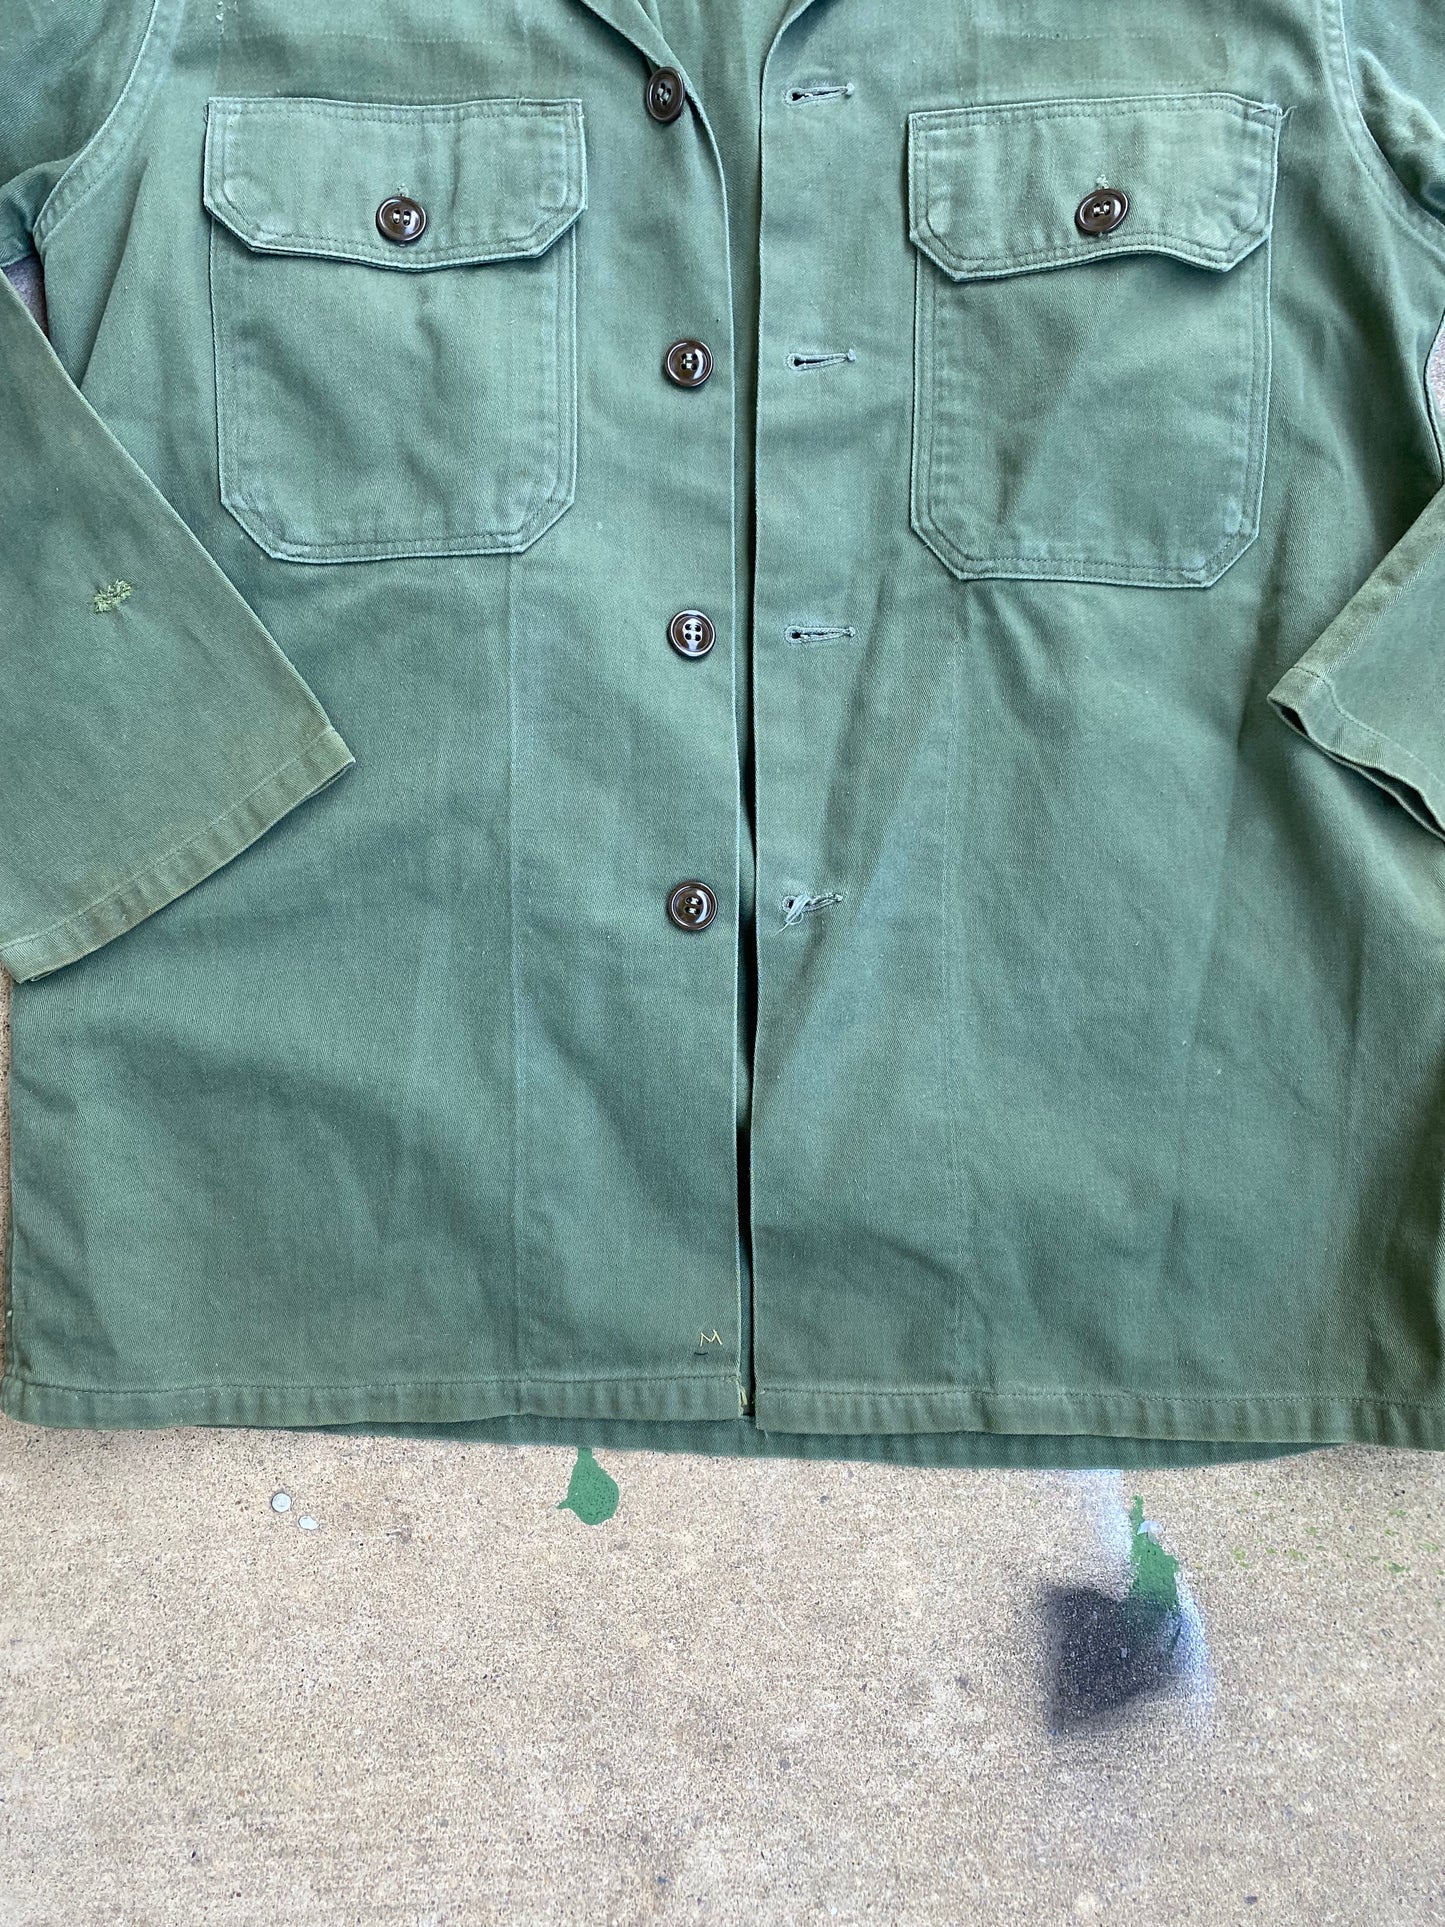 1950 BSA Green Jacket